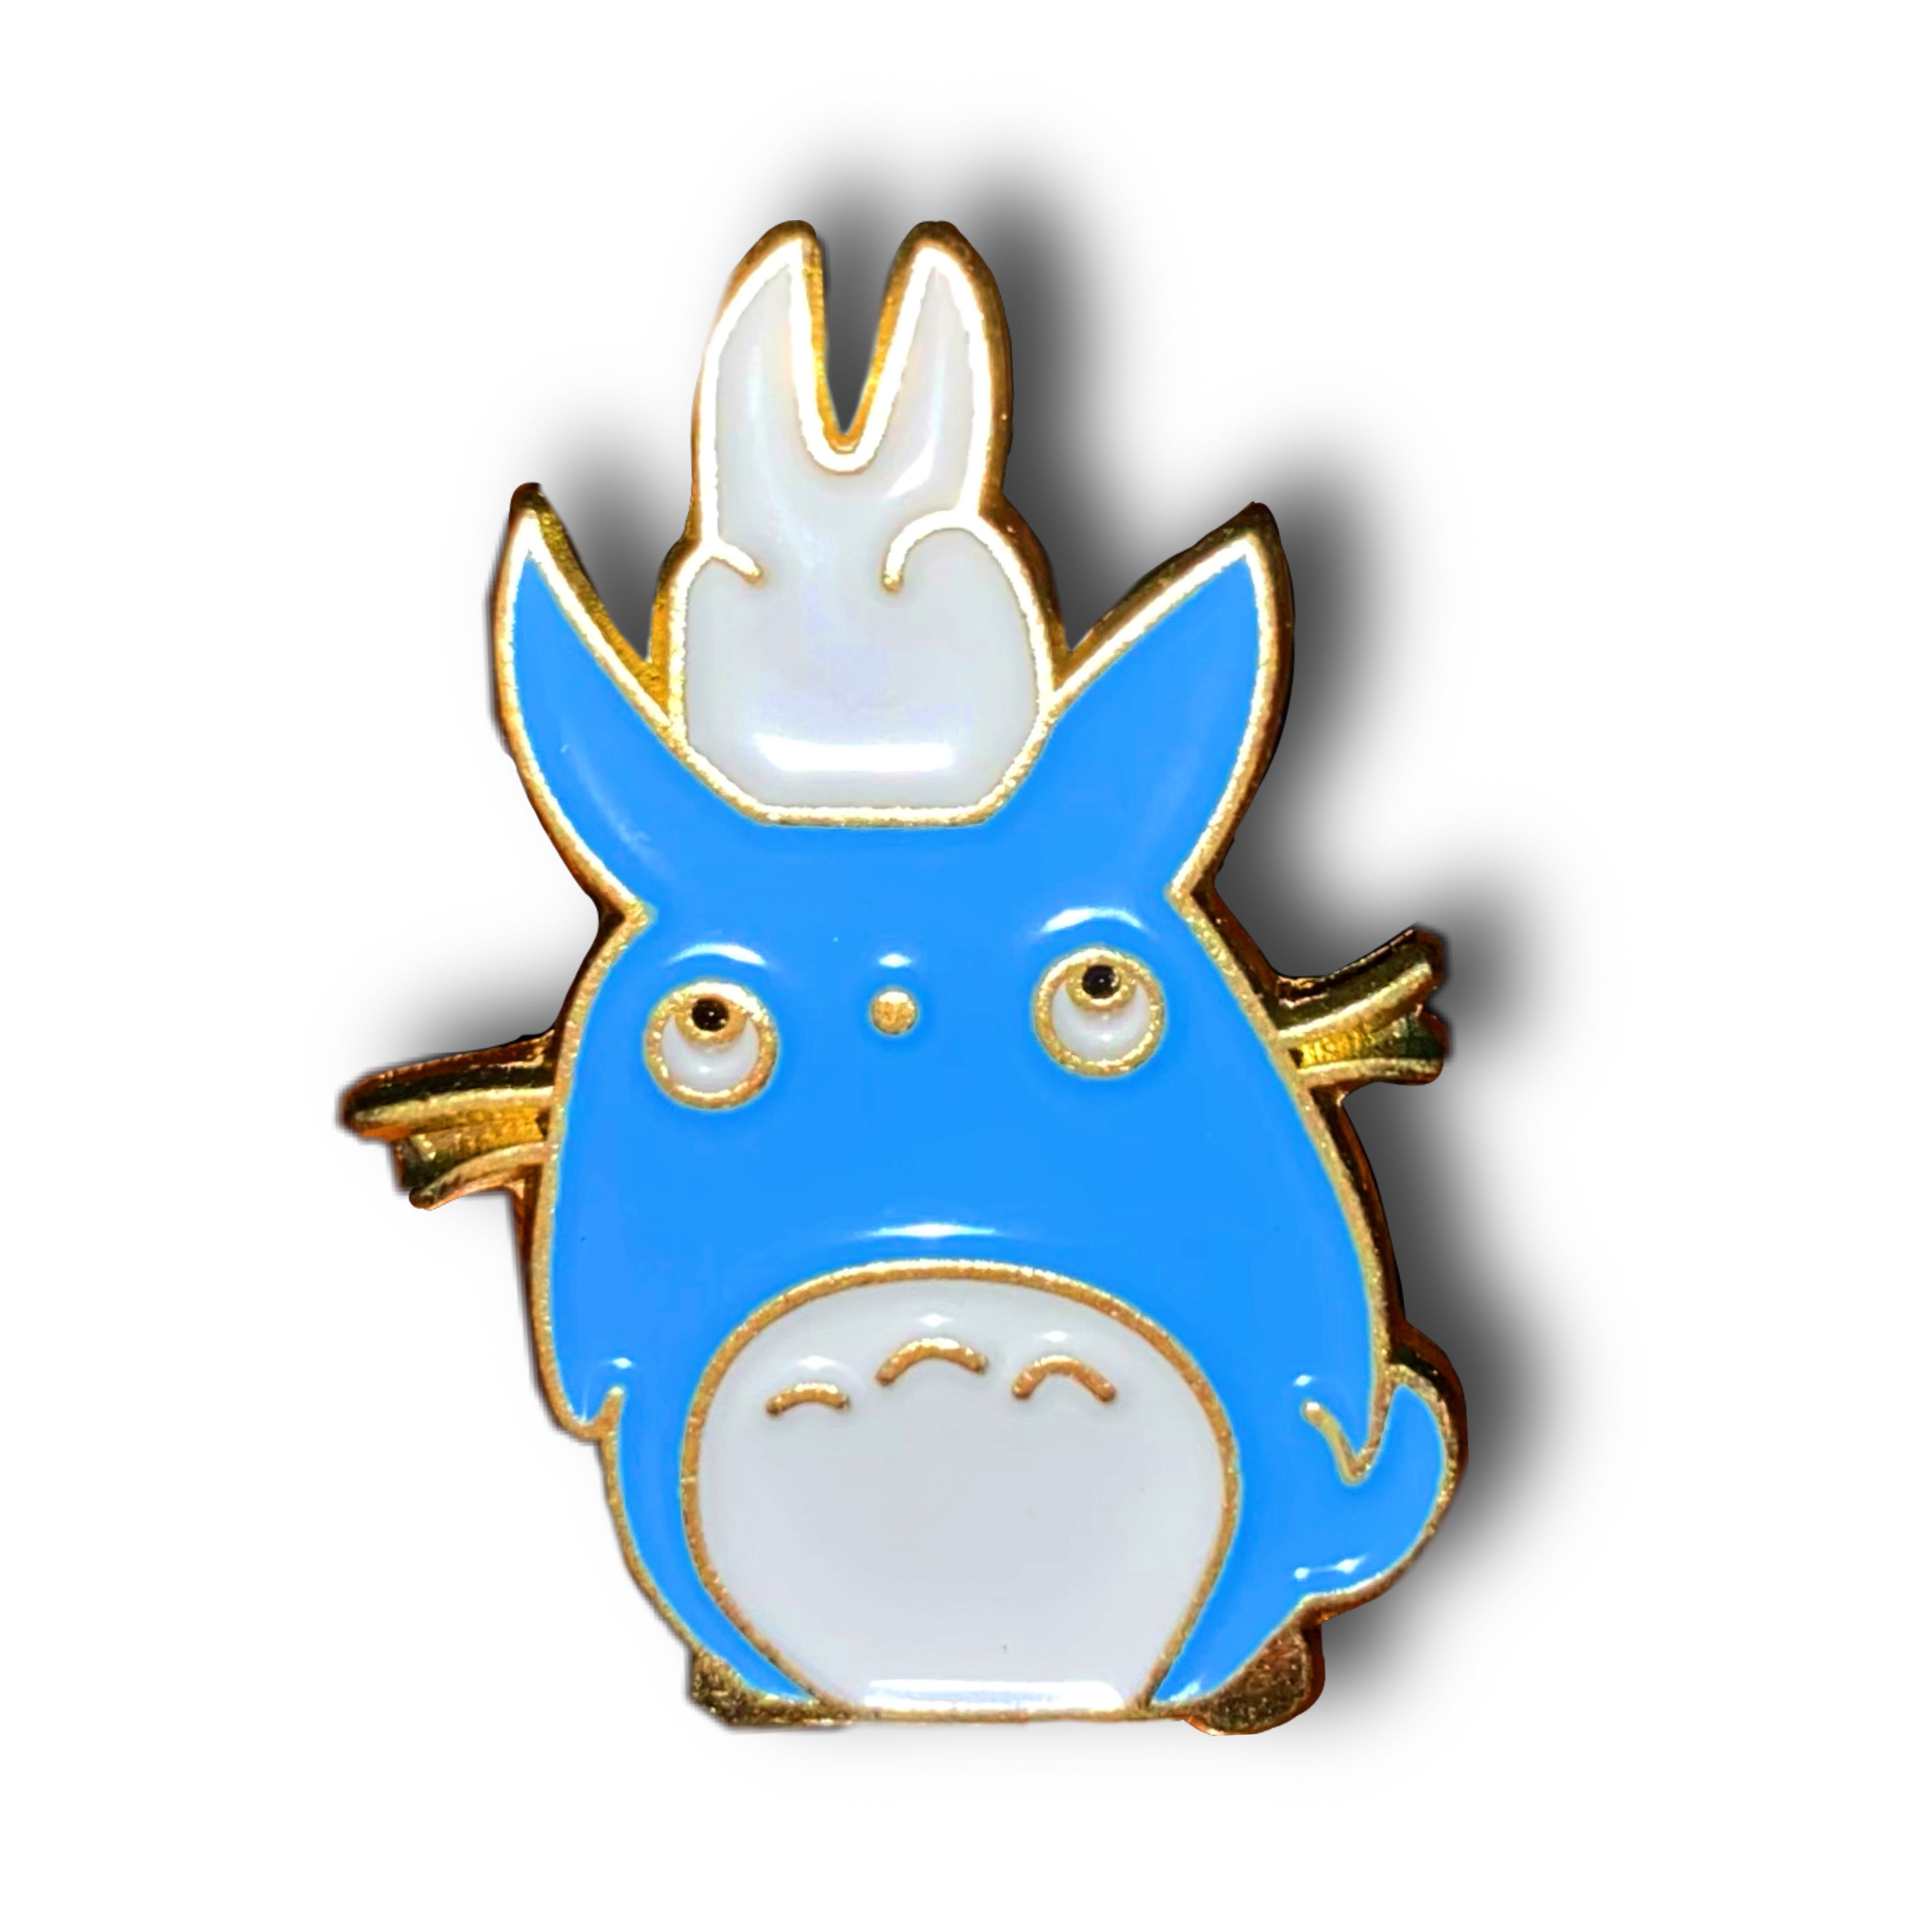 Totoro Assortment Enamel Pin Badges